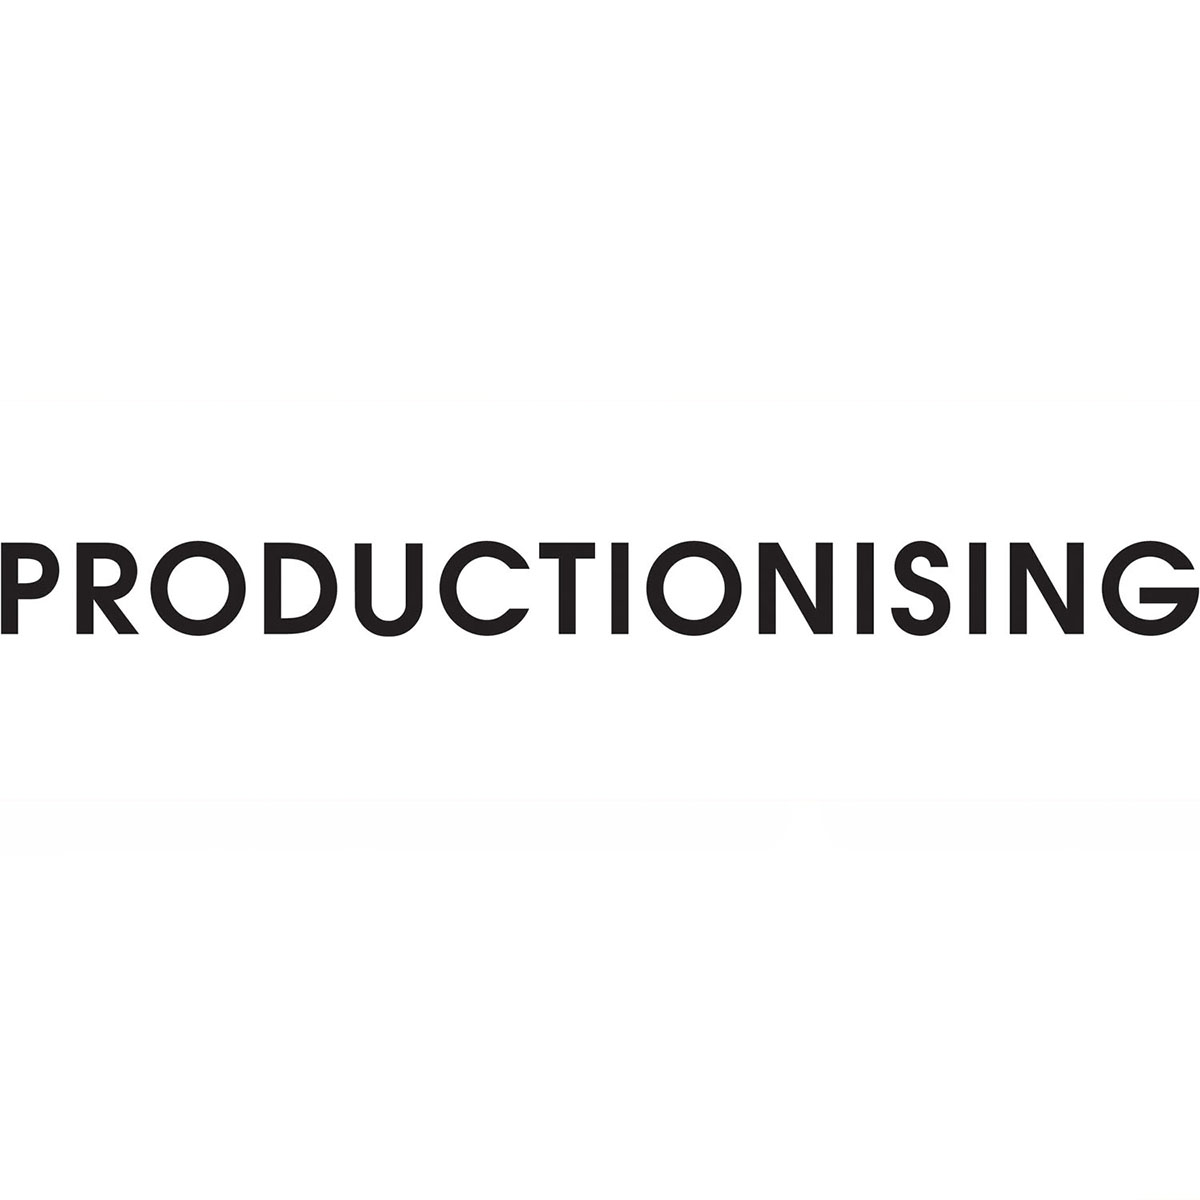 Productionising